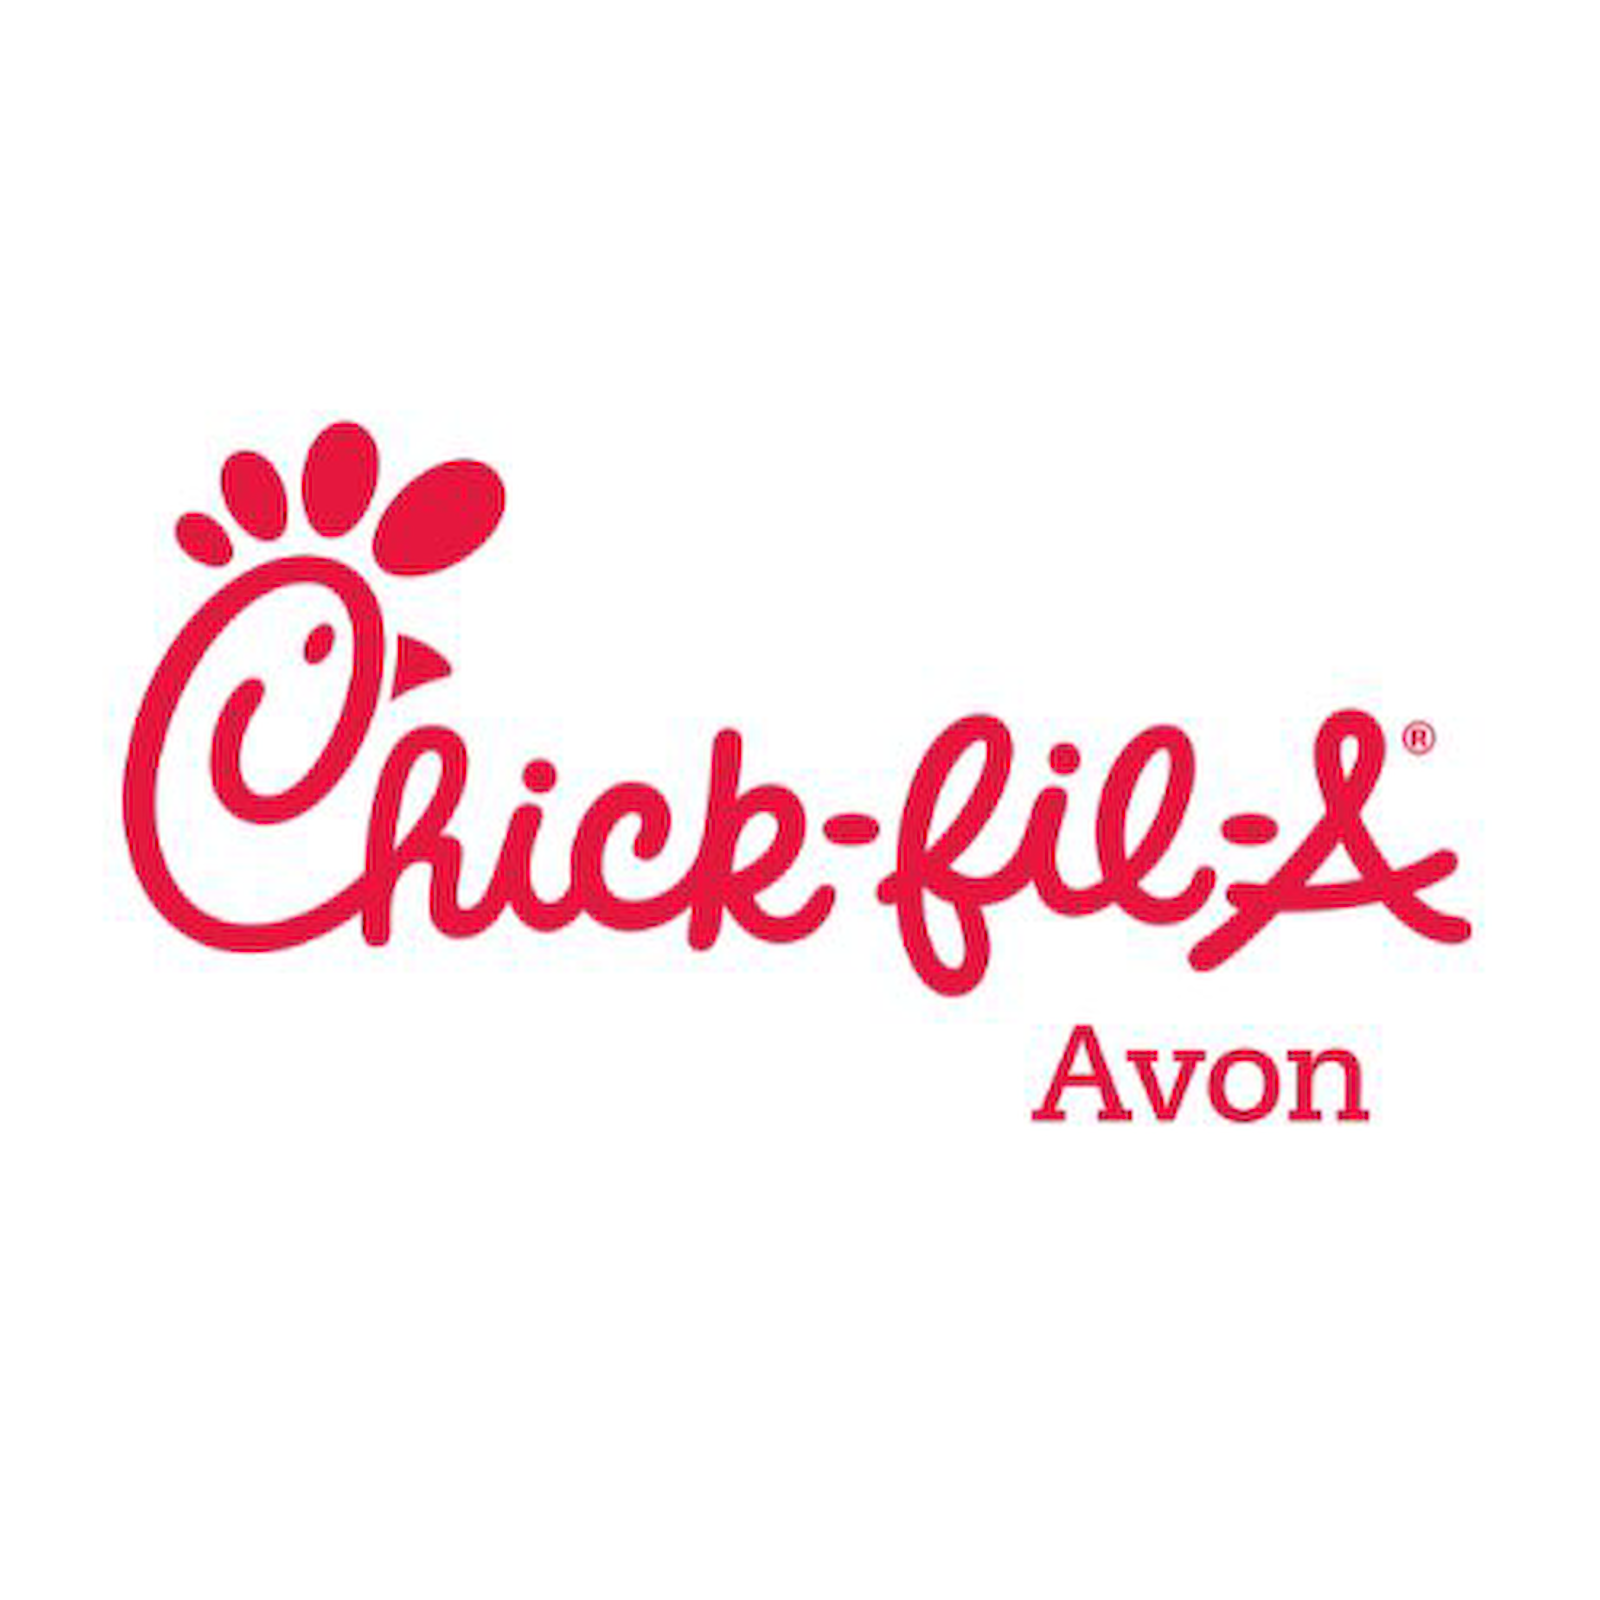 Chick-fil-A of Avon